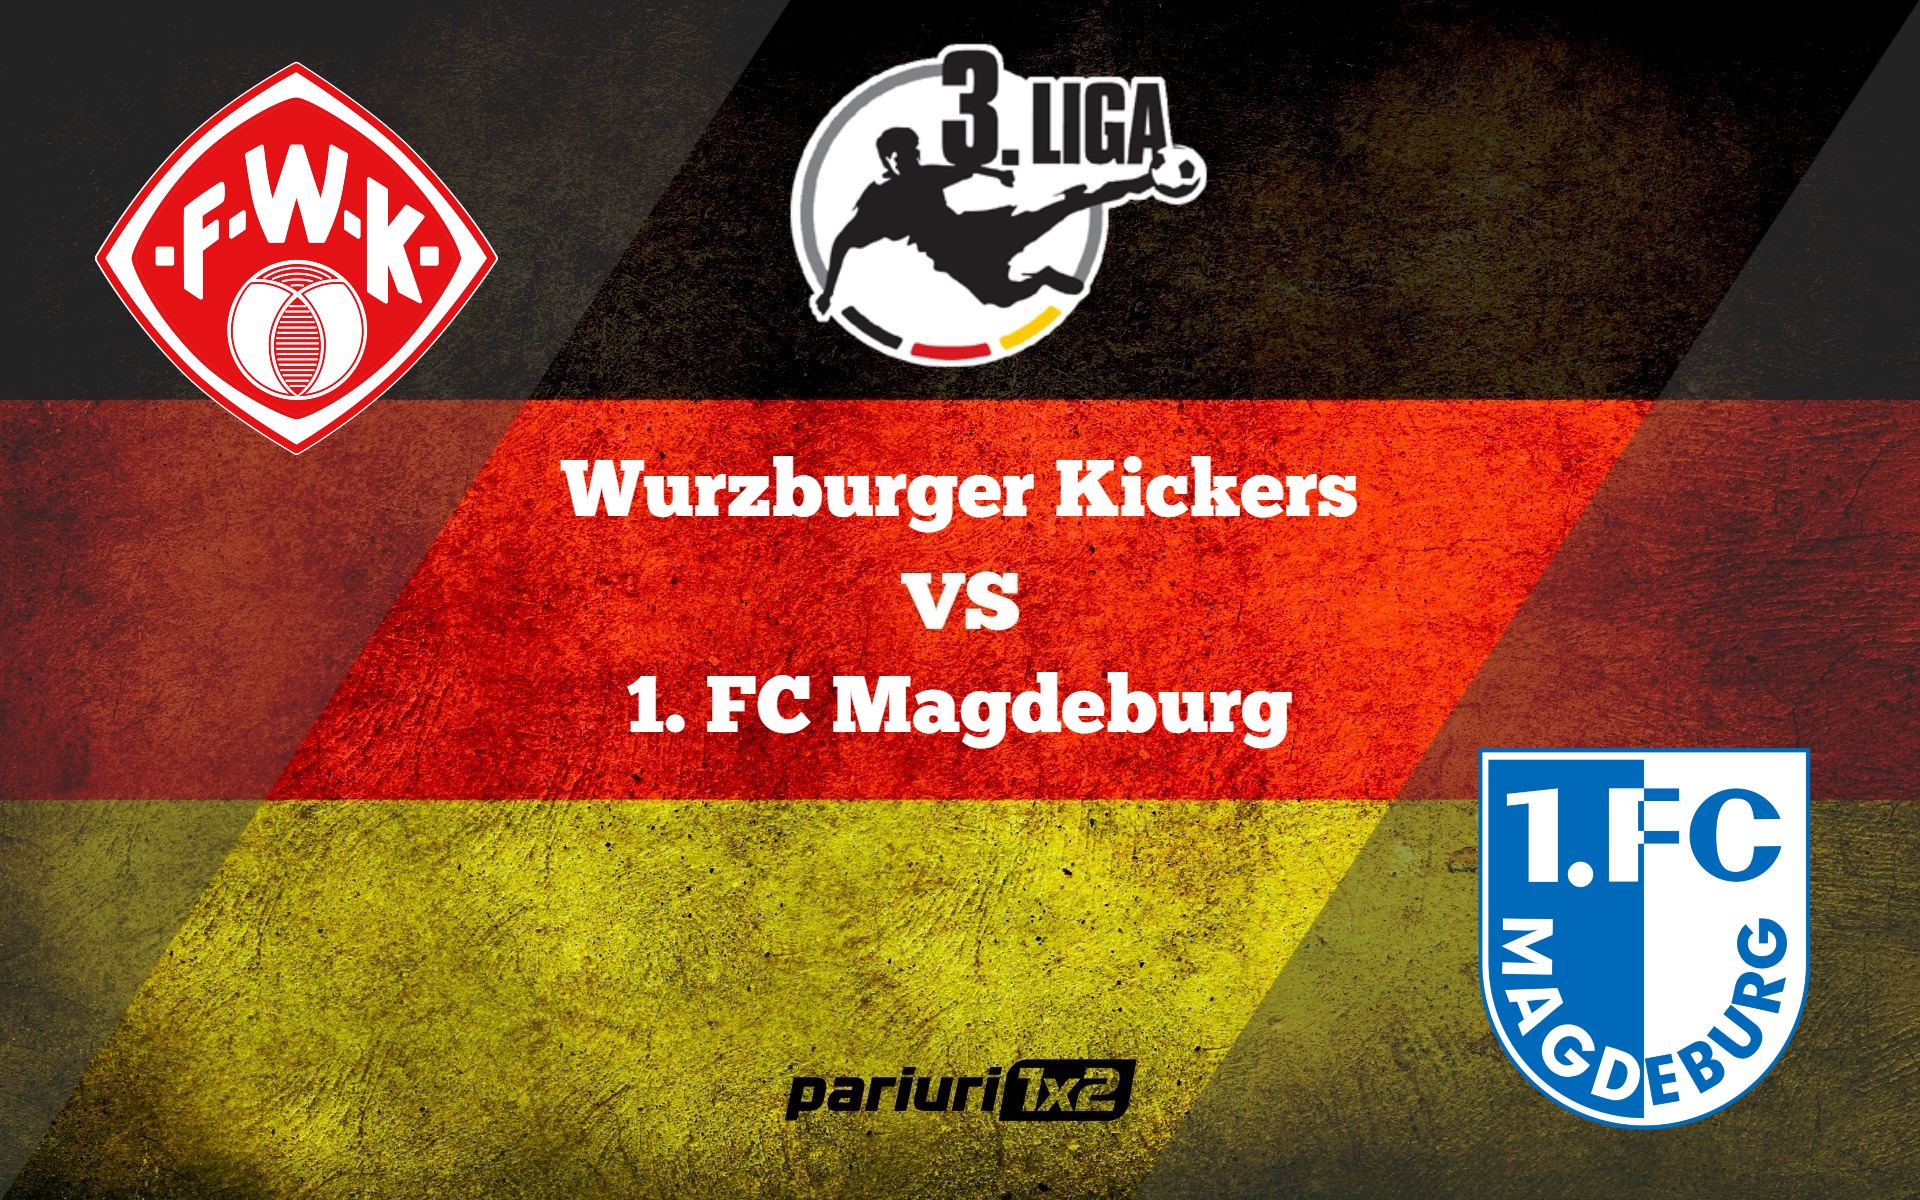 Ponturi fotbal » Wurzburger Kickers – 1. FC Magdeburg: Gazdele au prima sansa la un rezultat pozitiv!